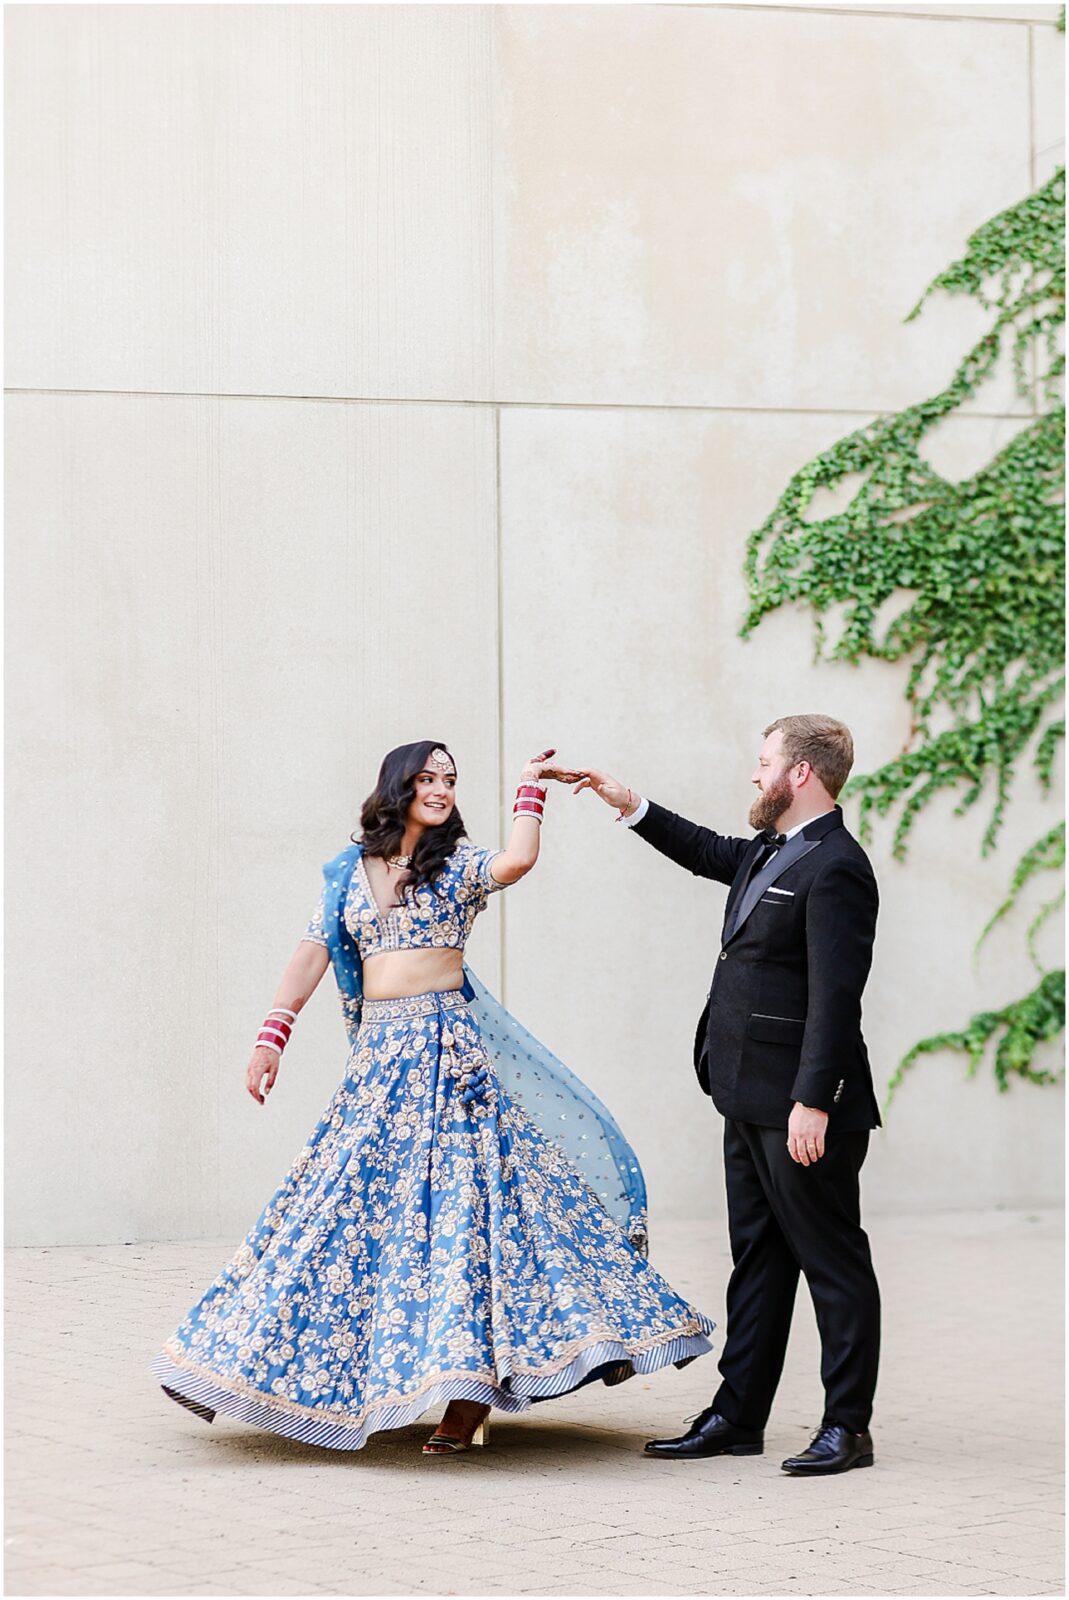 Indian Sikh Fusion Wedding Ceremony at Bardot, Loews, Kauffman Center - Luxury Wedding Photography by Mariam Saifan in Kansas City